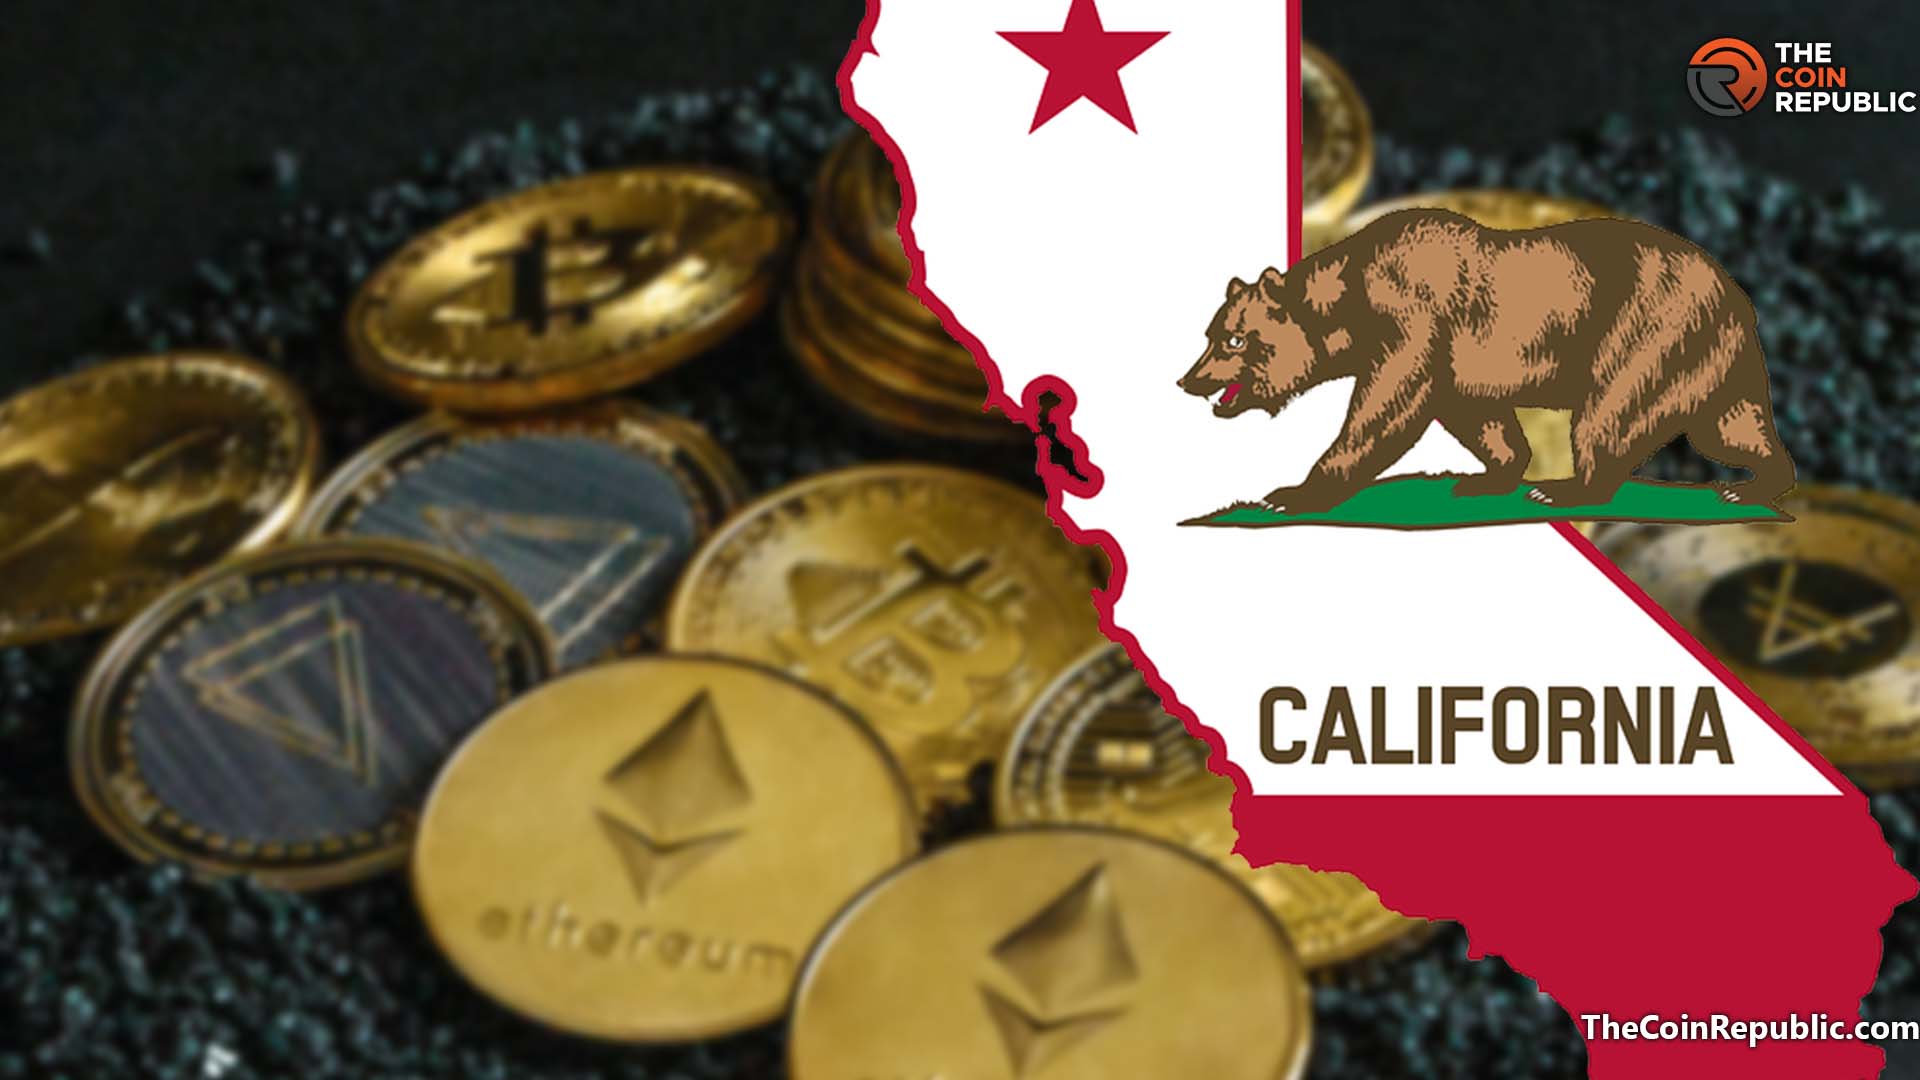 California coin crypto cs go wild betting 2022 mock